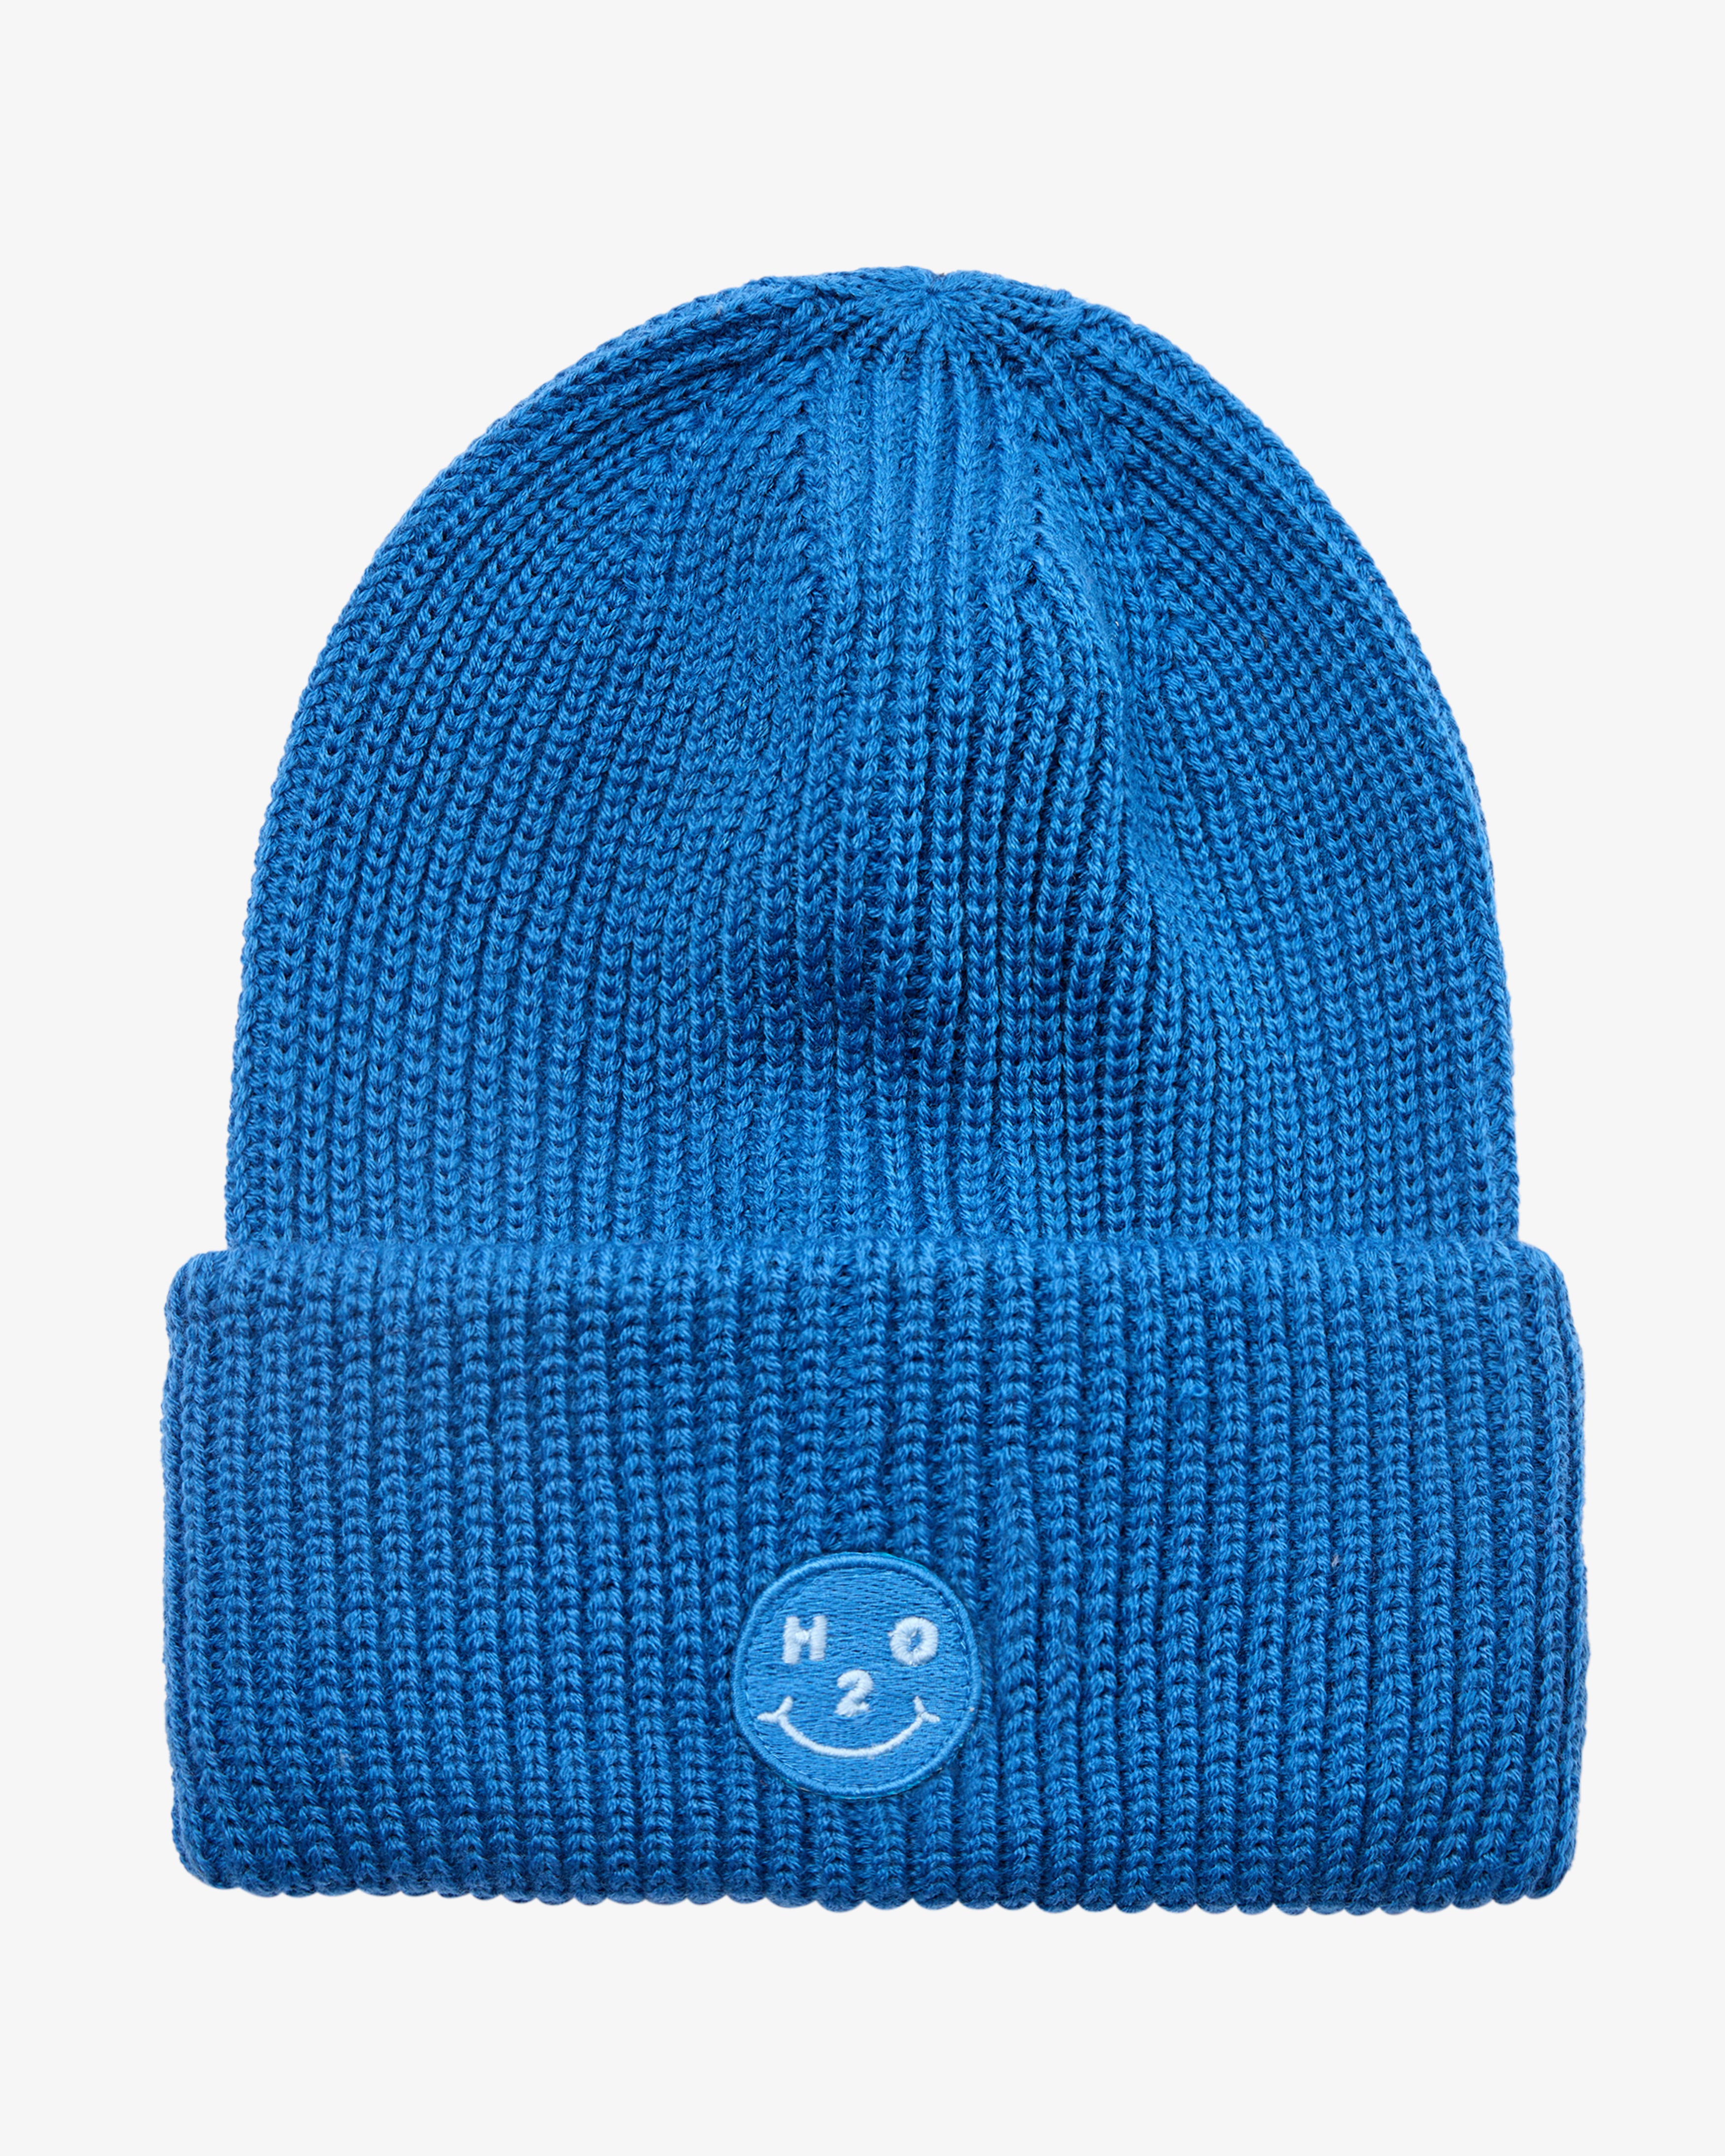 Happy Hat - Bright Blue